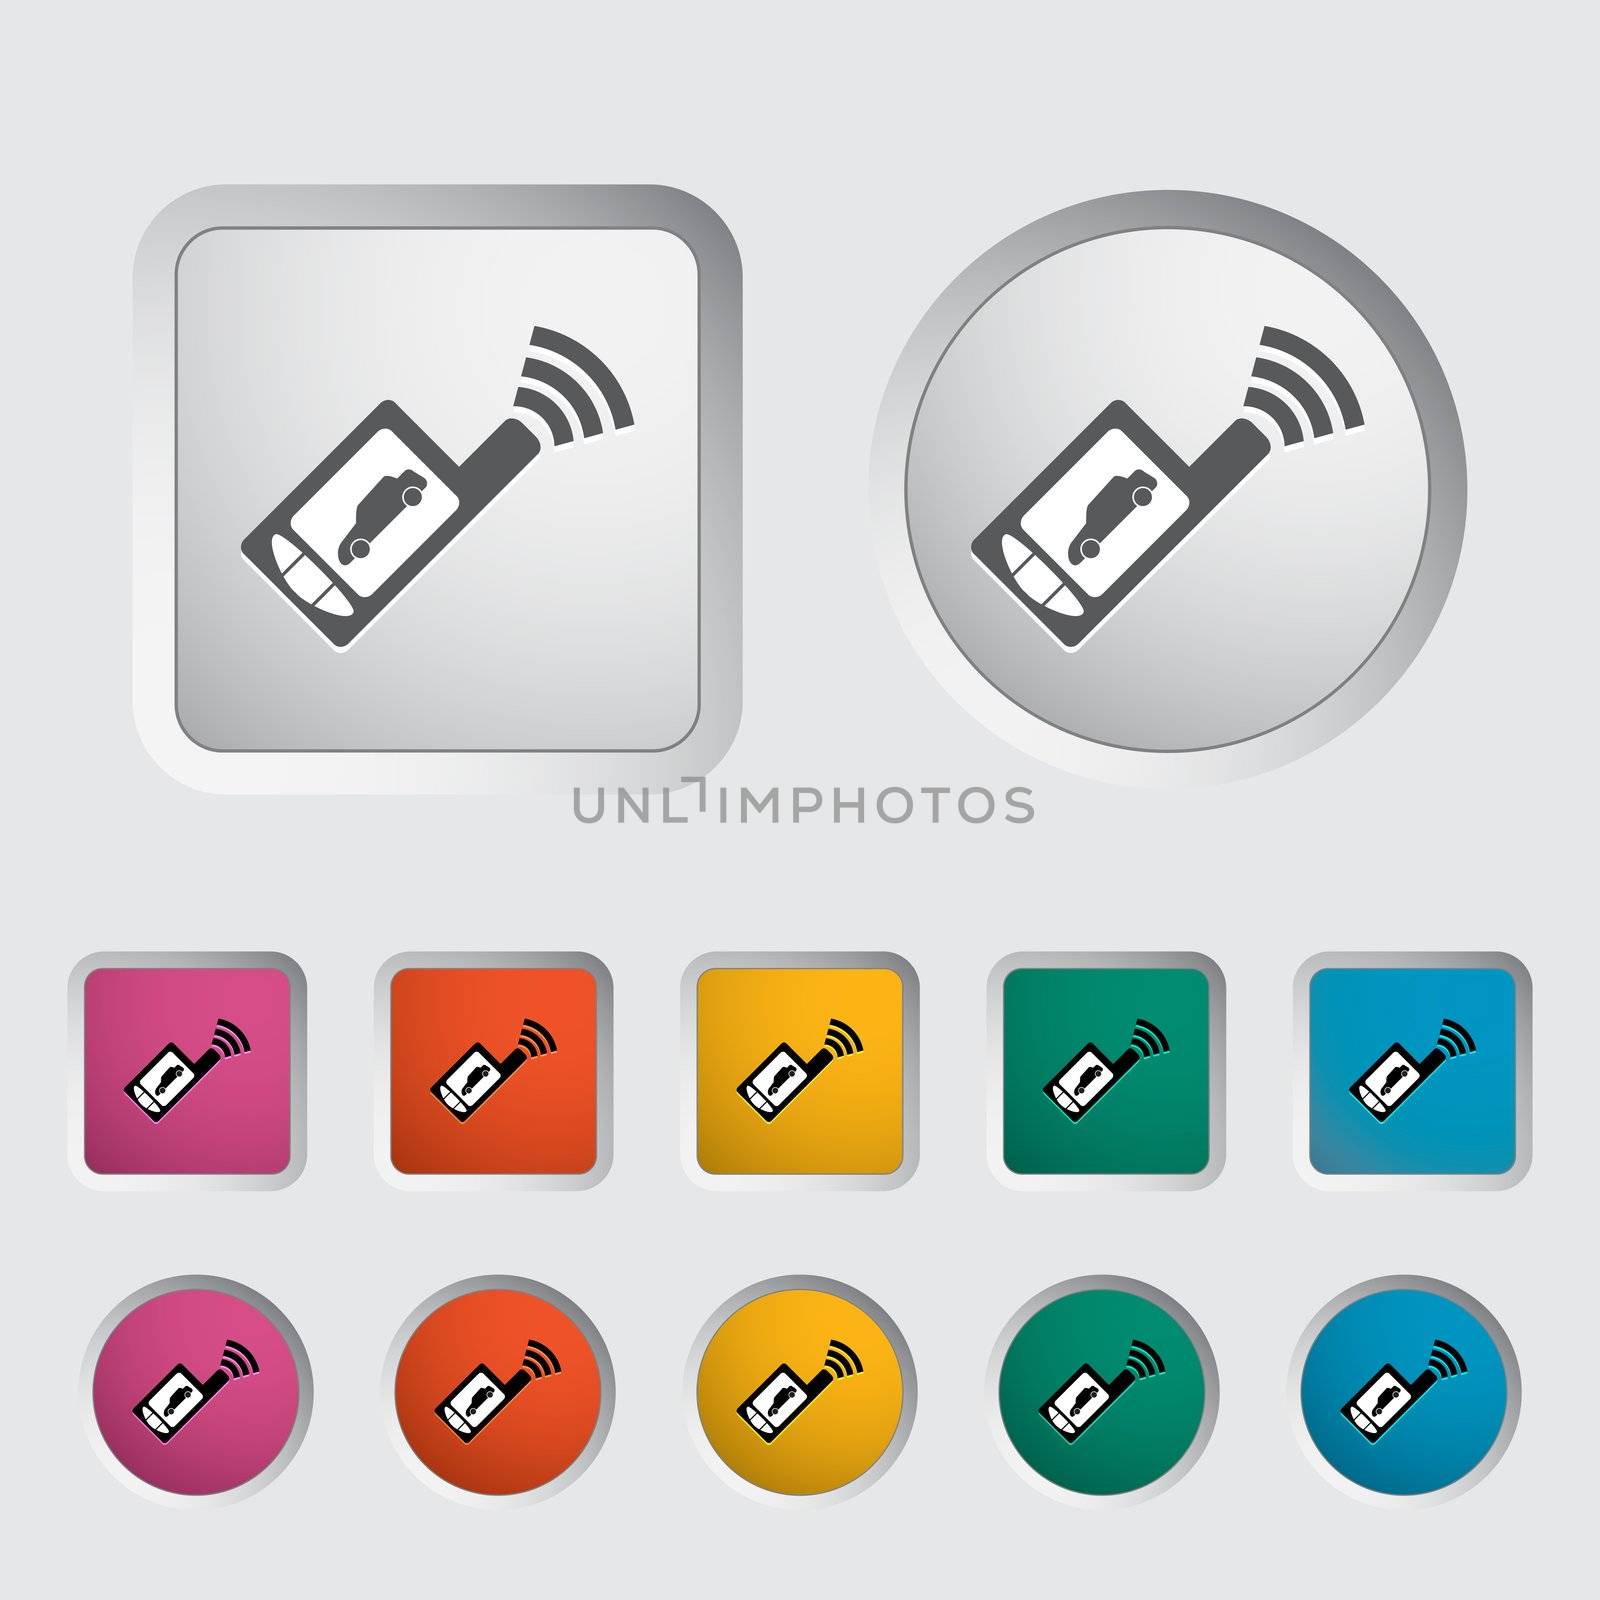 Remote control icon by smoki